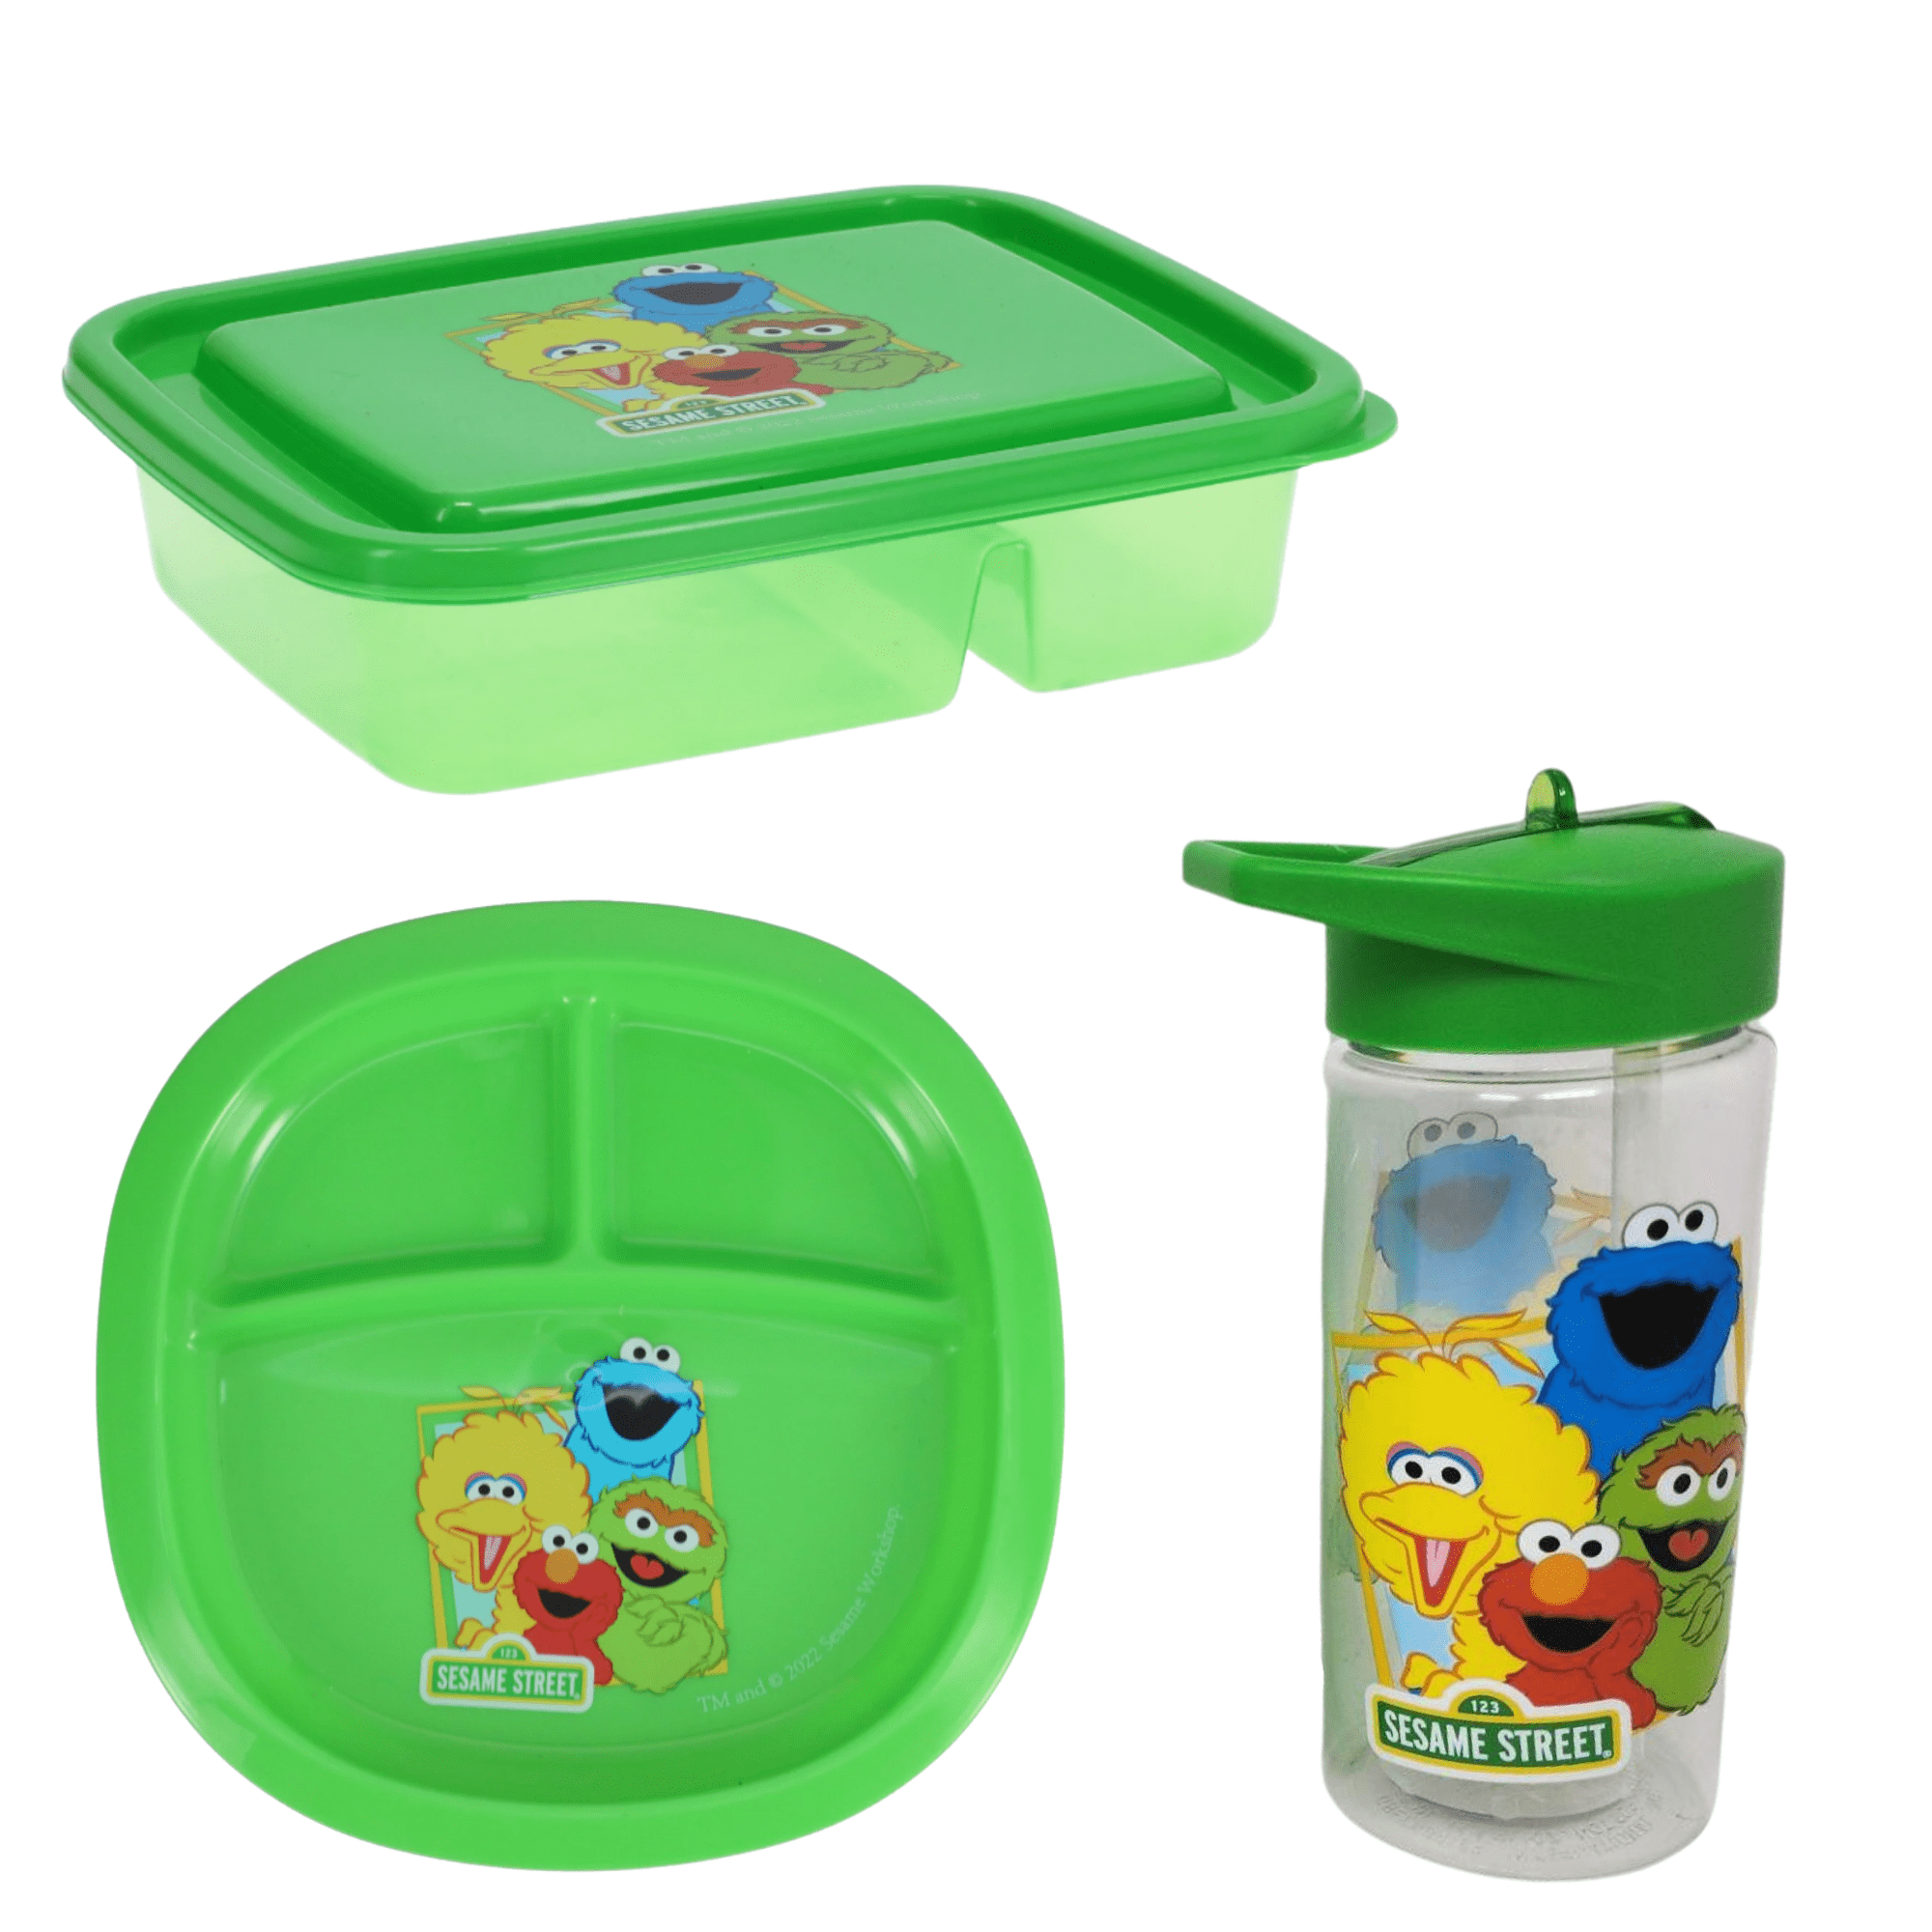 Sesame Street Cookie Monster Lunch Box Kit for Kids Blue Bento Box